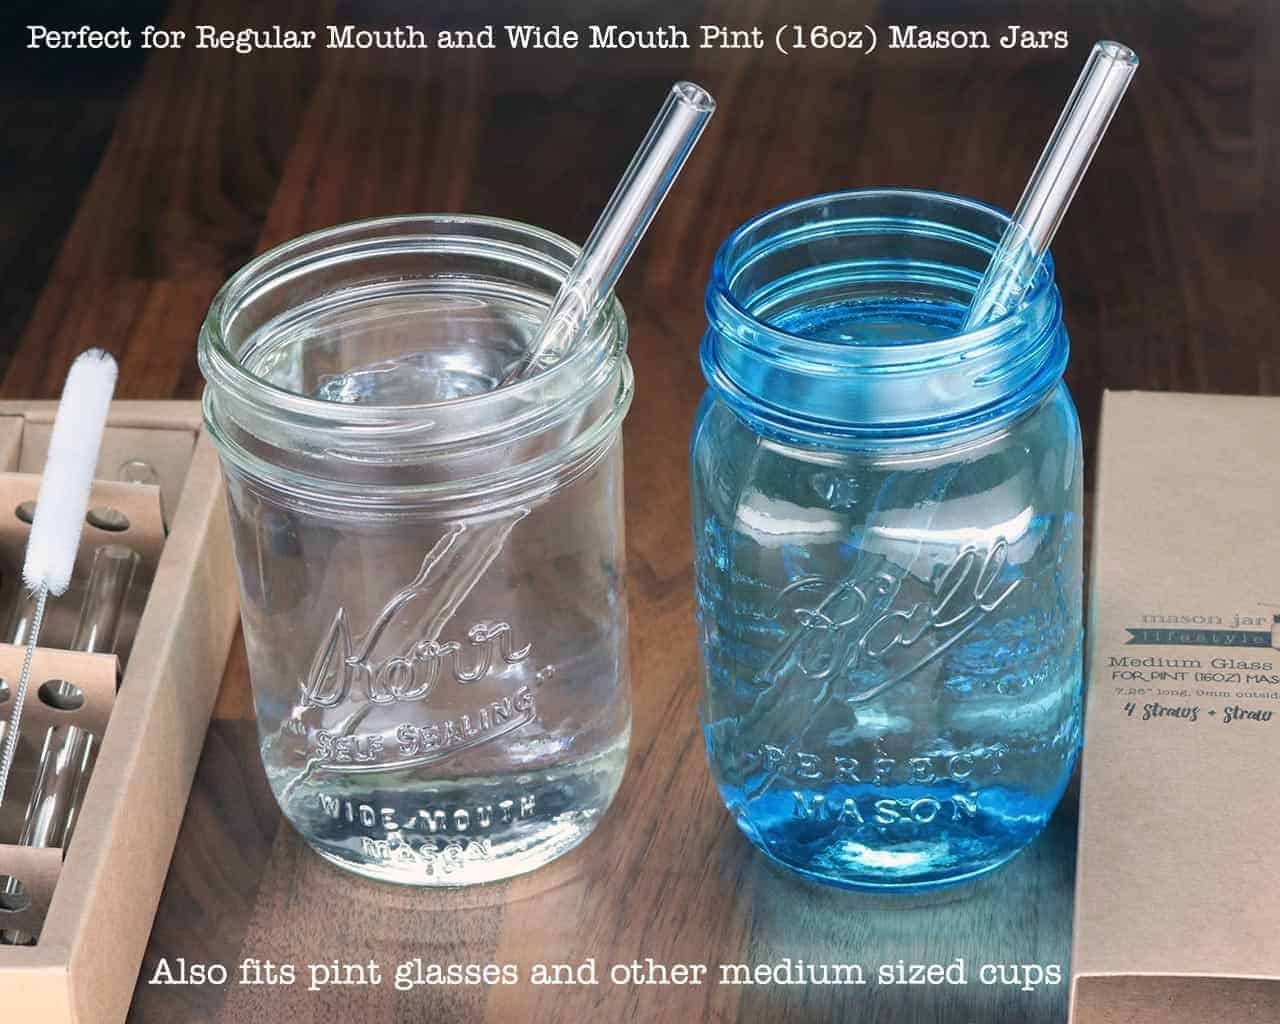 mjl-glass-straws-pint-16oz-mason-jars-7.25-inches-9mm-4-pack-cleaner-box